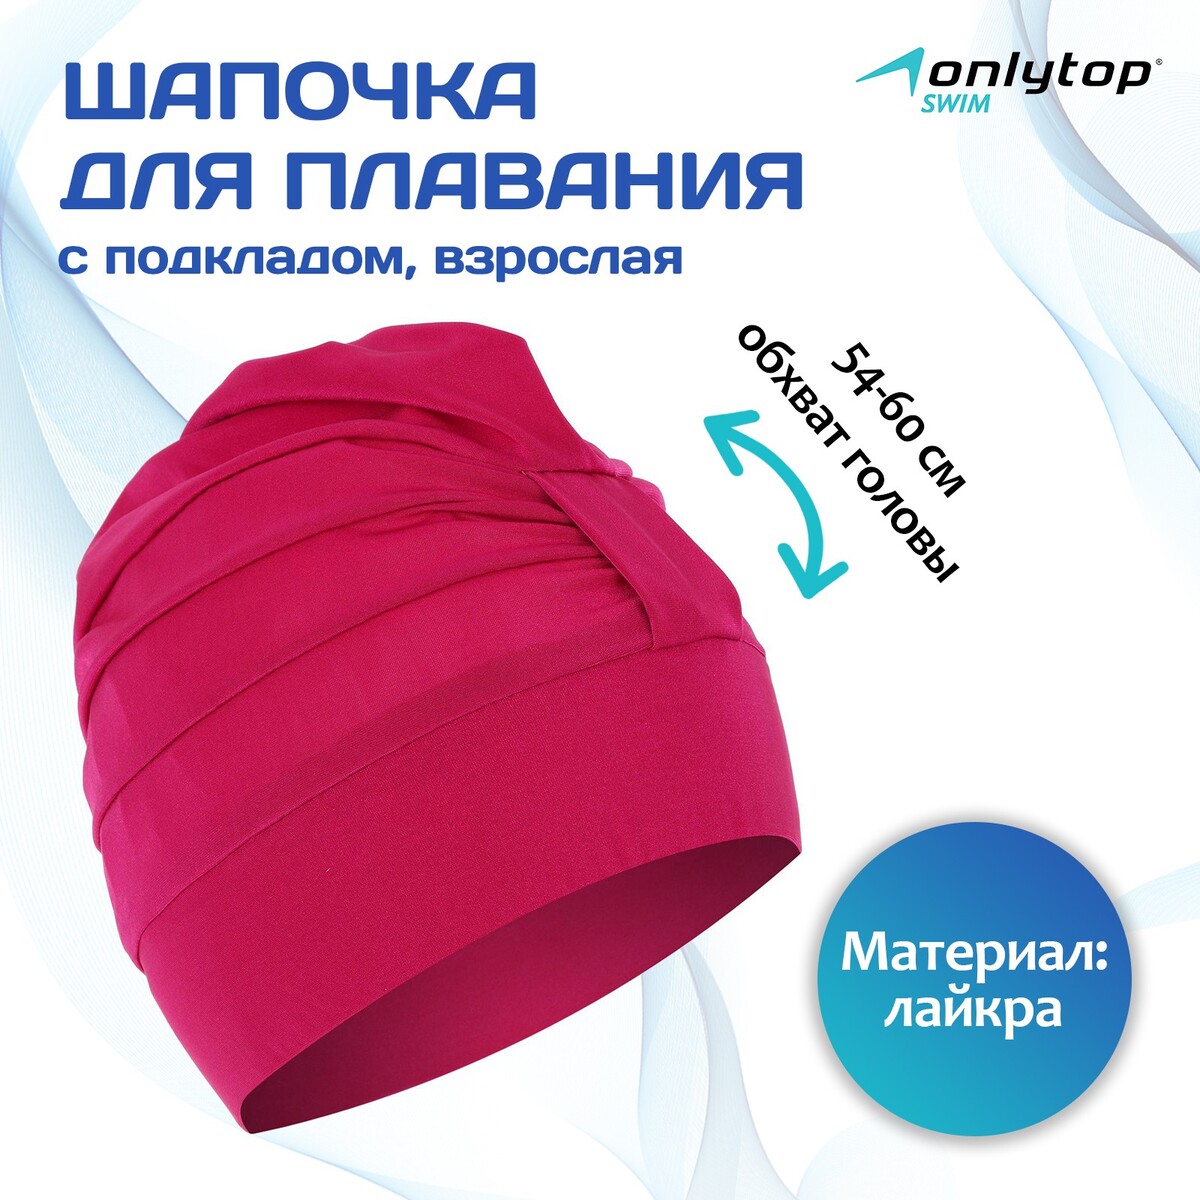 Шапочка для плавания взрослая onlytop, тканевая, обхват 54-60 см, цвет фуксия шапочка для плавания atemi тканевая с силиконовым покрытием сс102 розовый